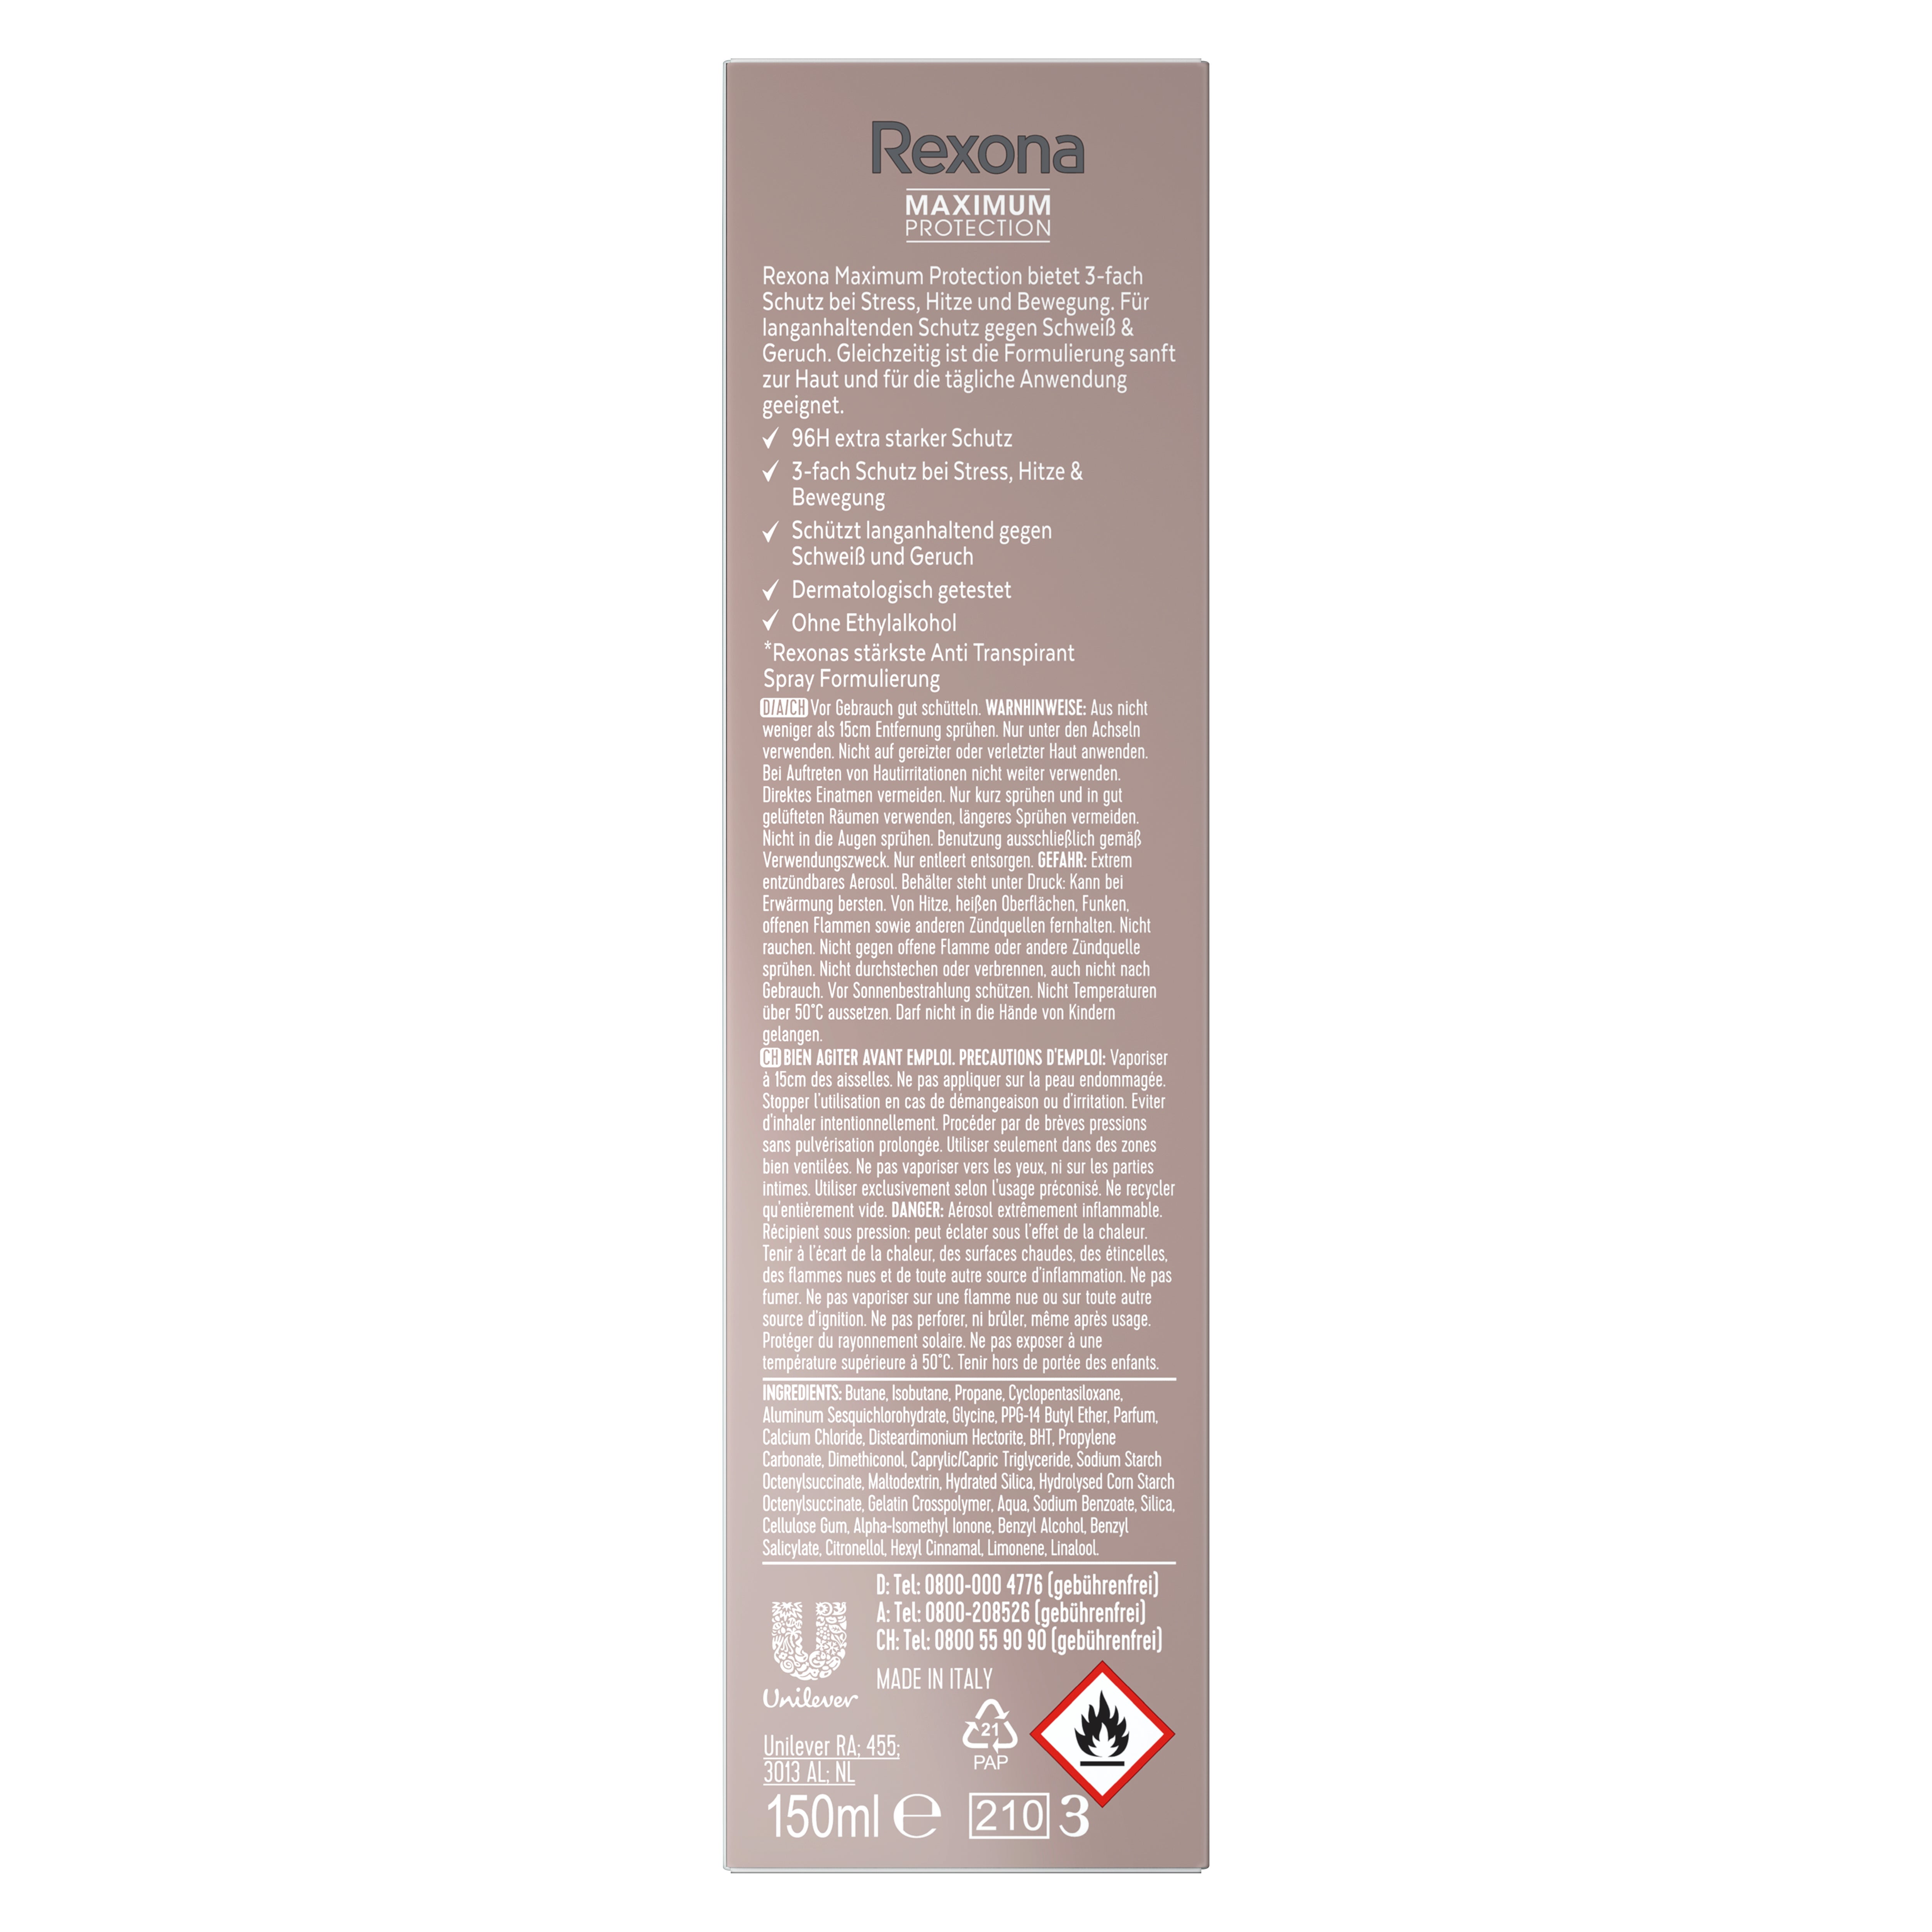 Rexona Maximum Protection Deospray Anti-Transpirant Clean Fresh 150 ml